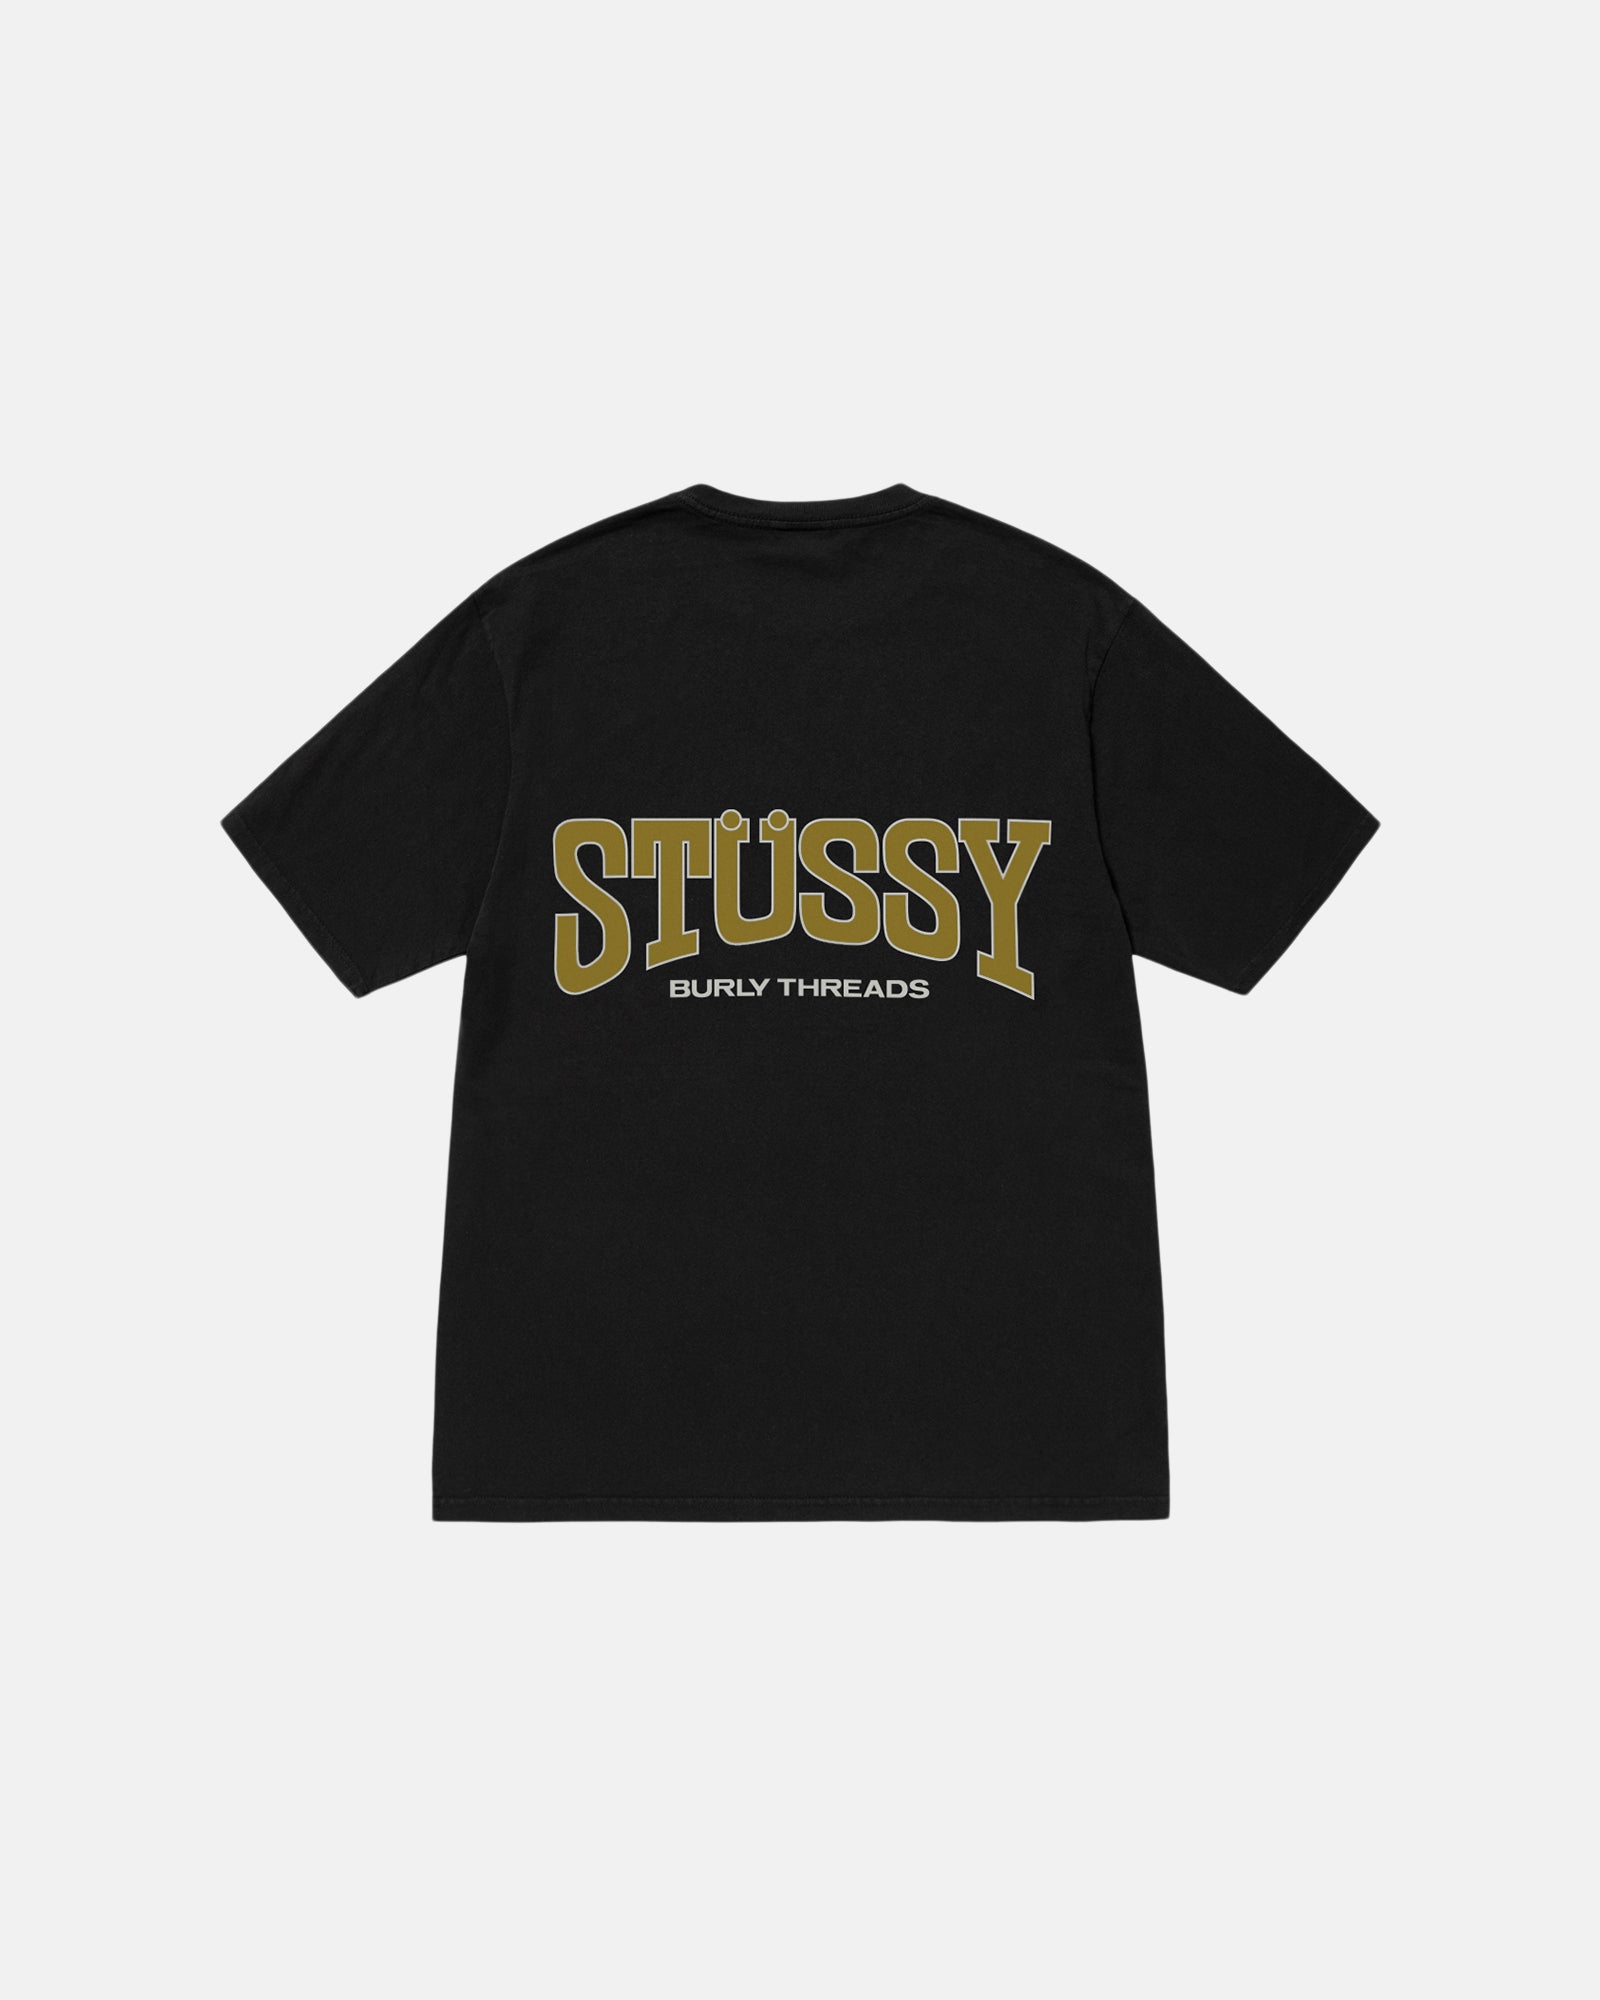 Shop all – Stüssy